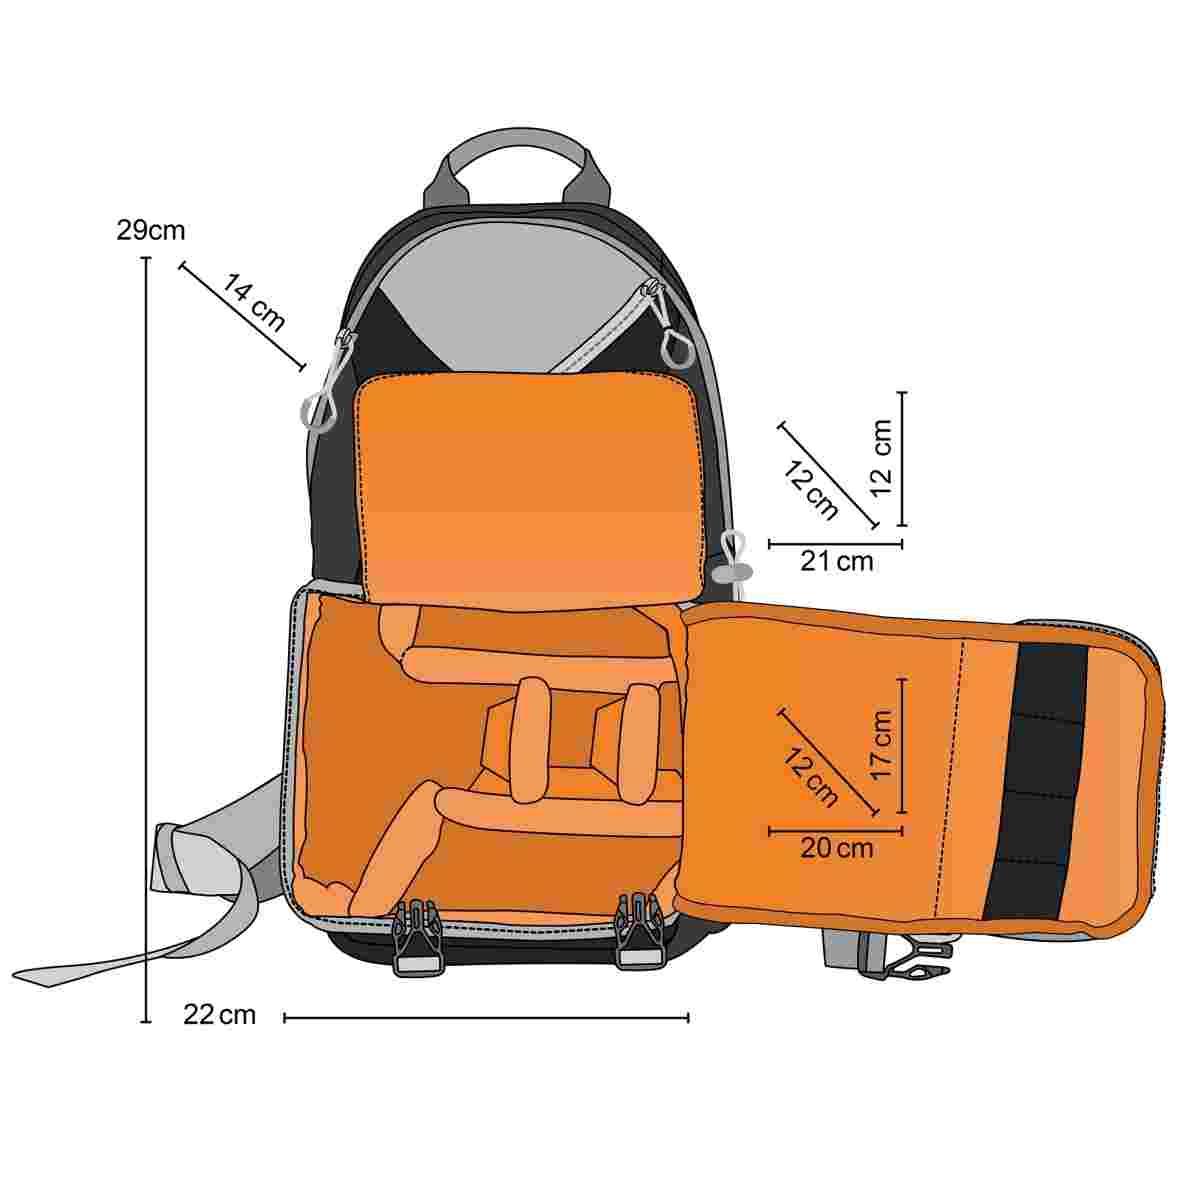 Mantona camera backpack ElementsPro Sling black